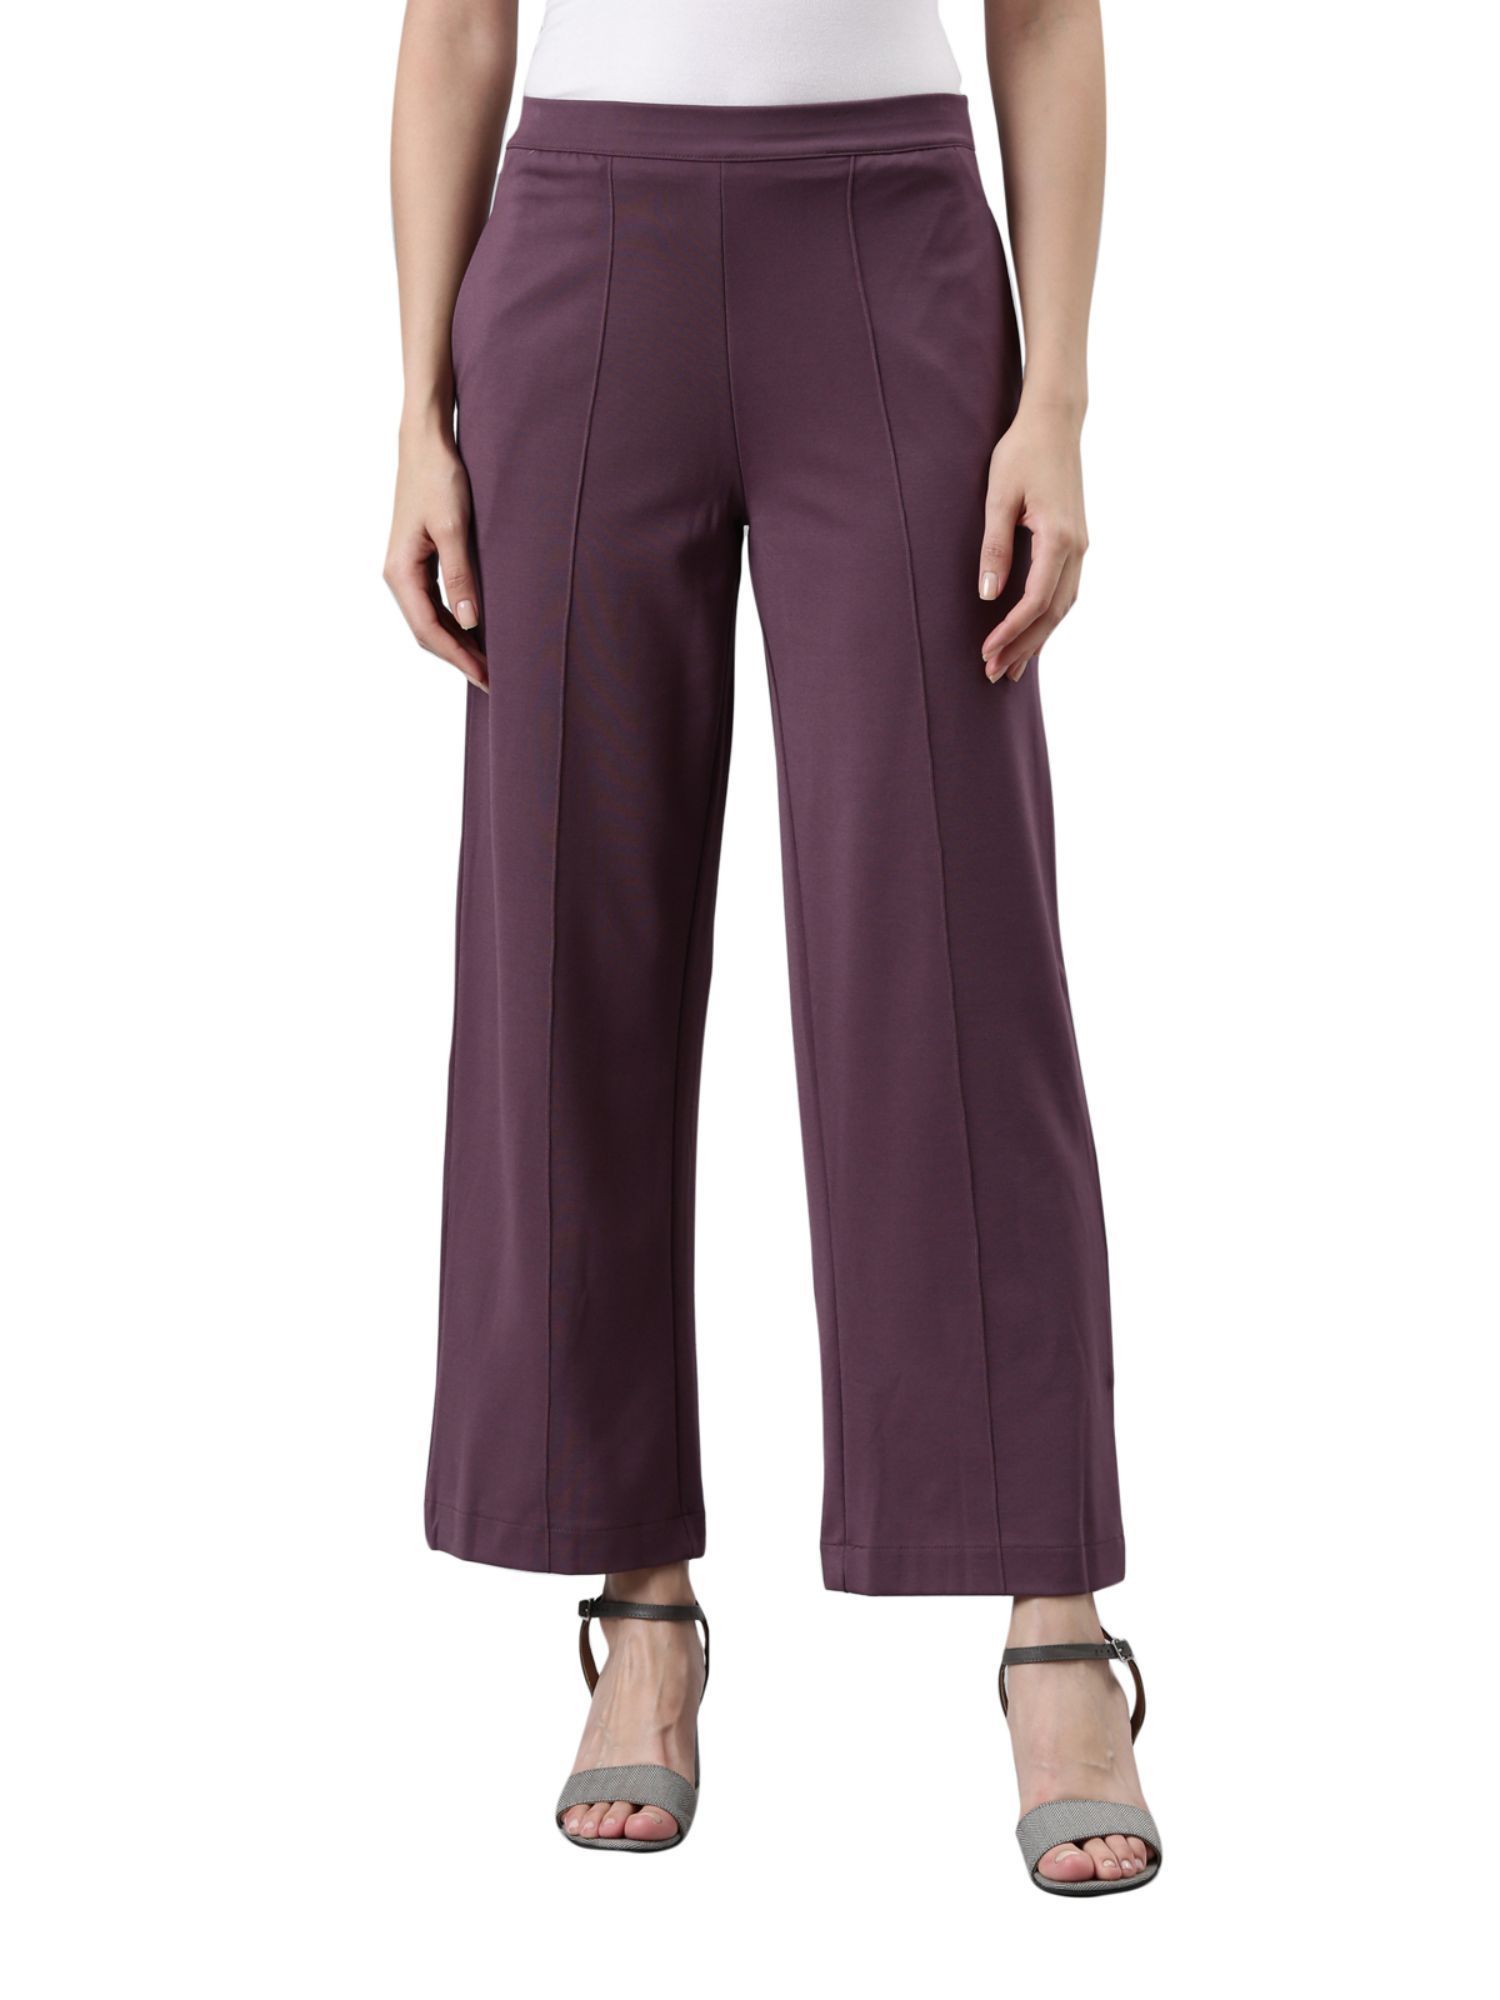 Buy GO COLORS Women Stripe Purple Printed Pencil Pant at Amazon.in